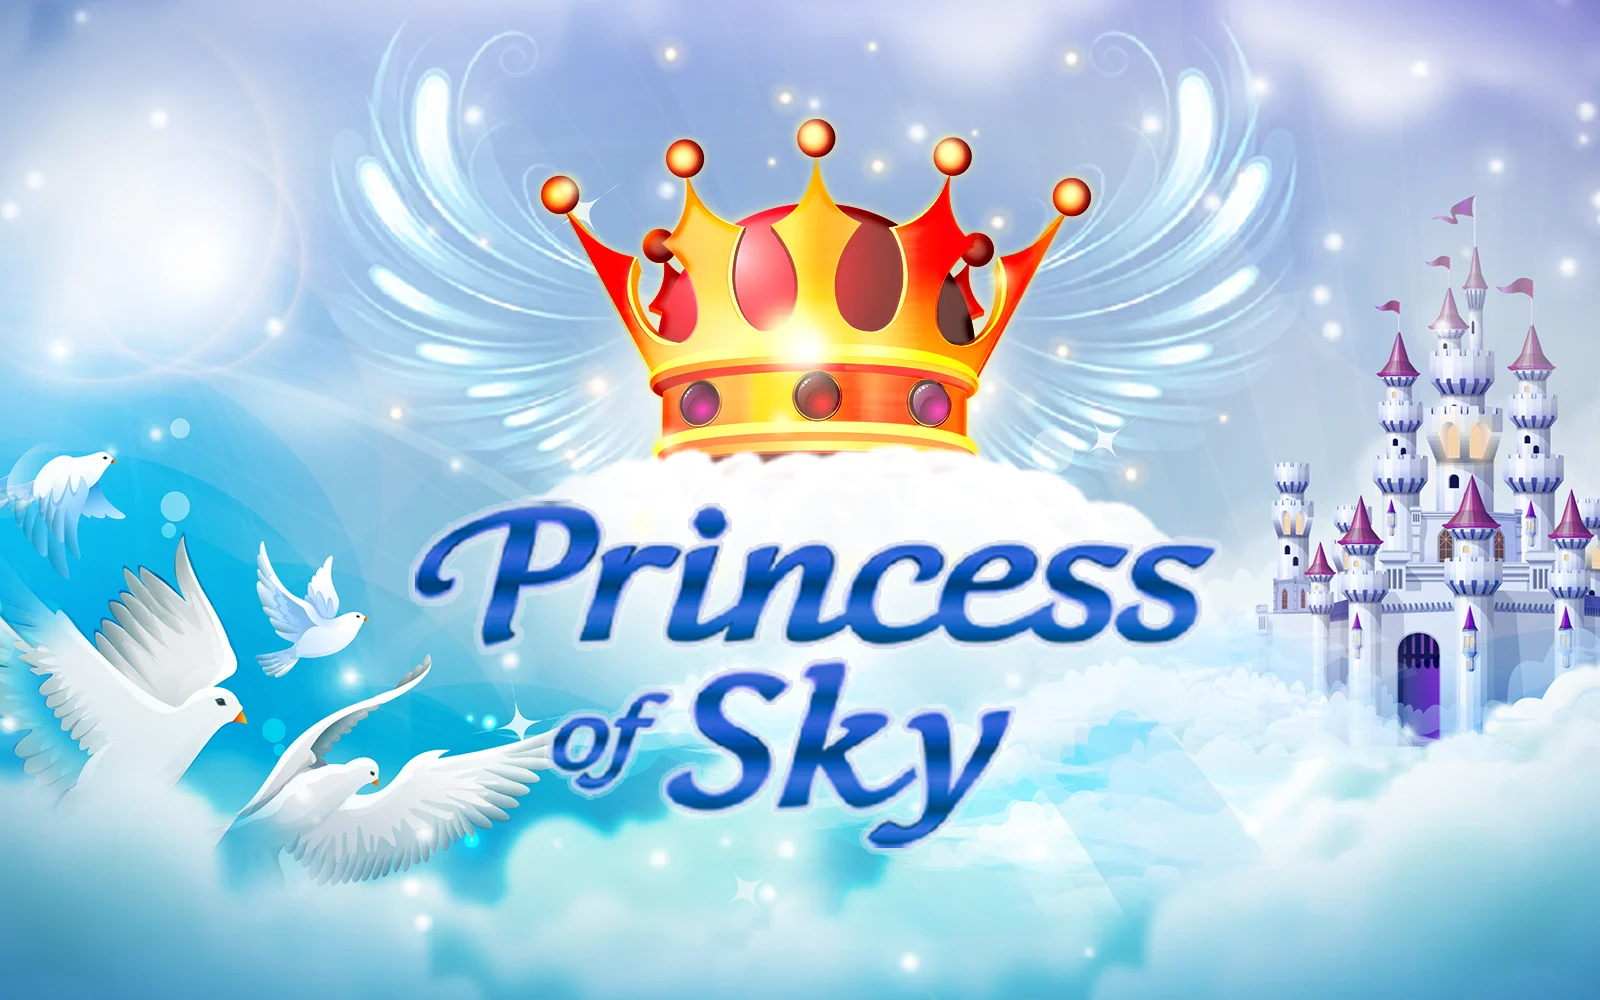 Starcasino.be online casino üzerinden Princess of Sky oynayın